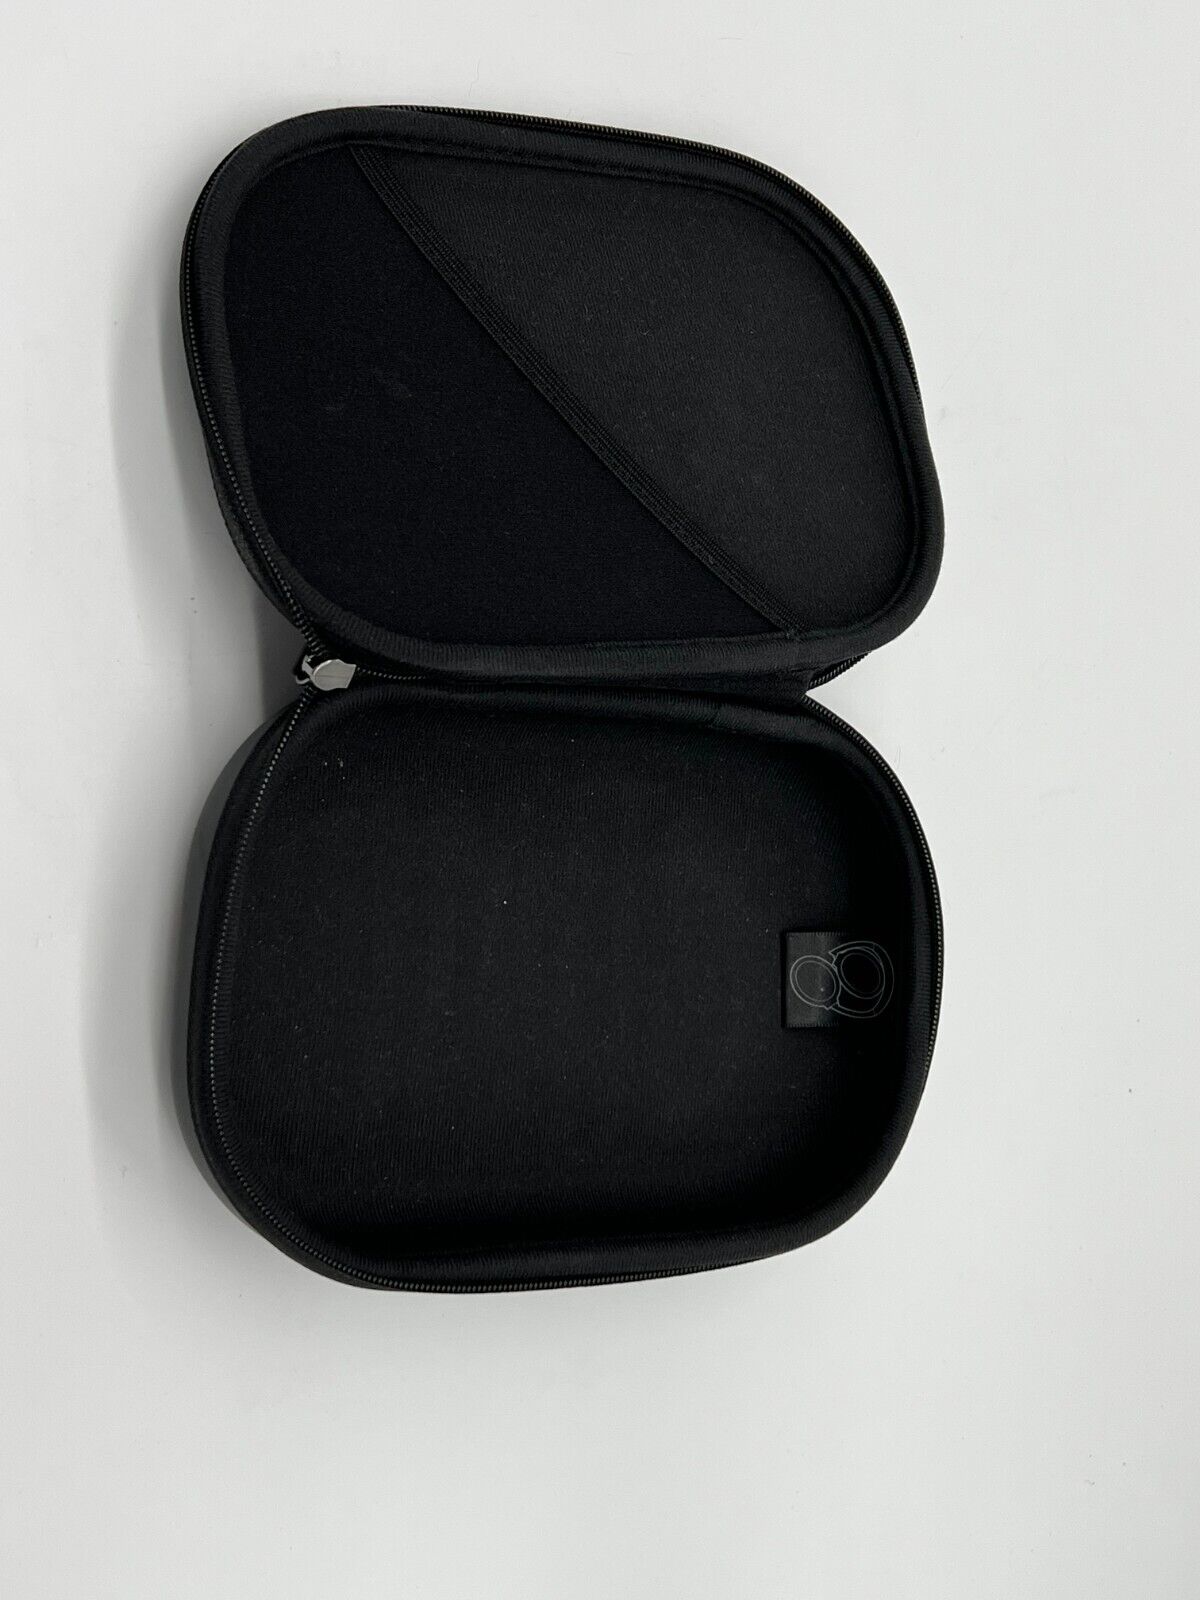 Bose QC35 Gen 2 Headphones Case - Black